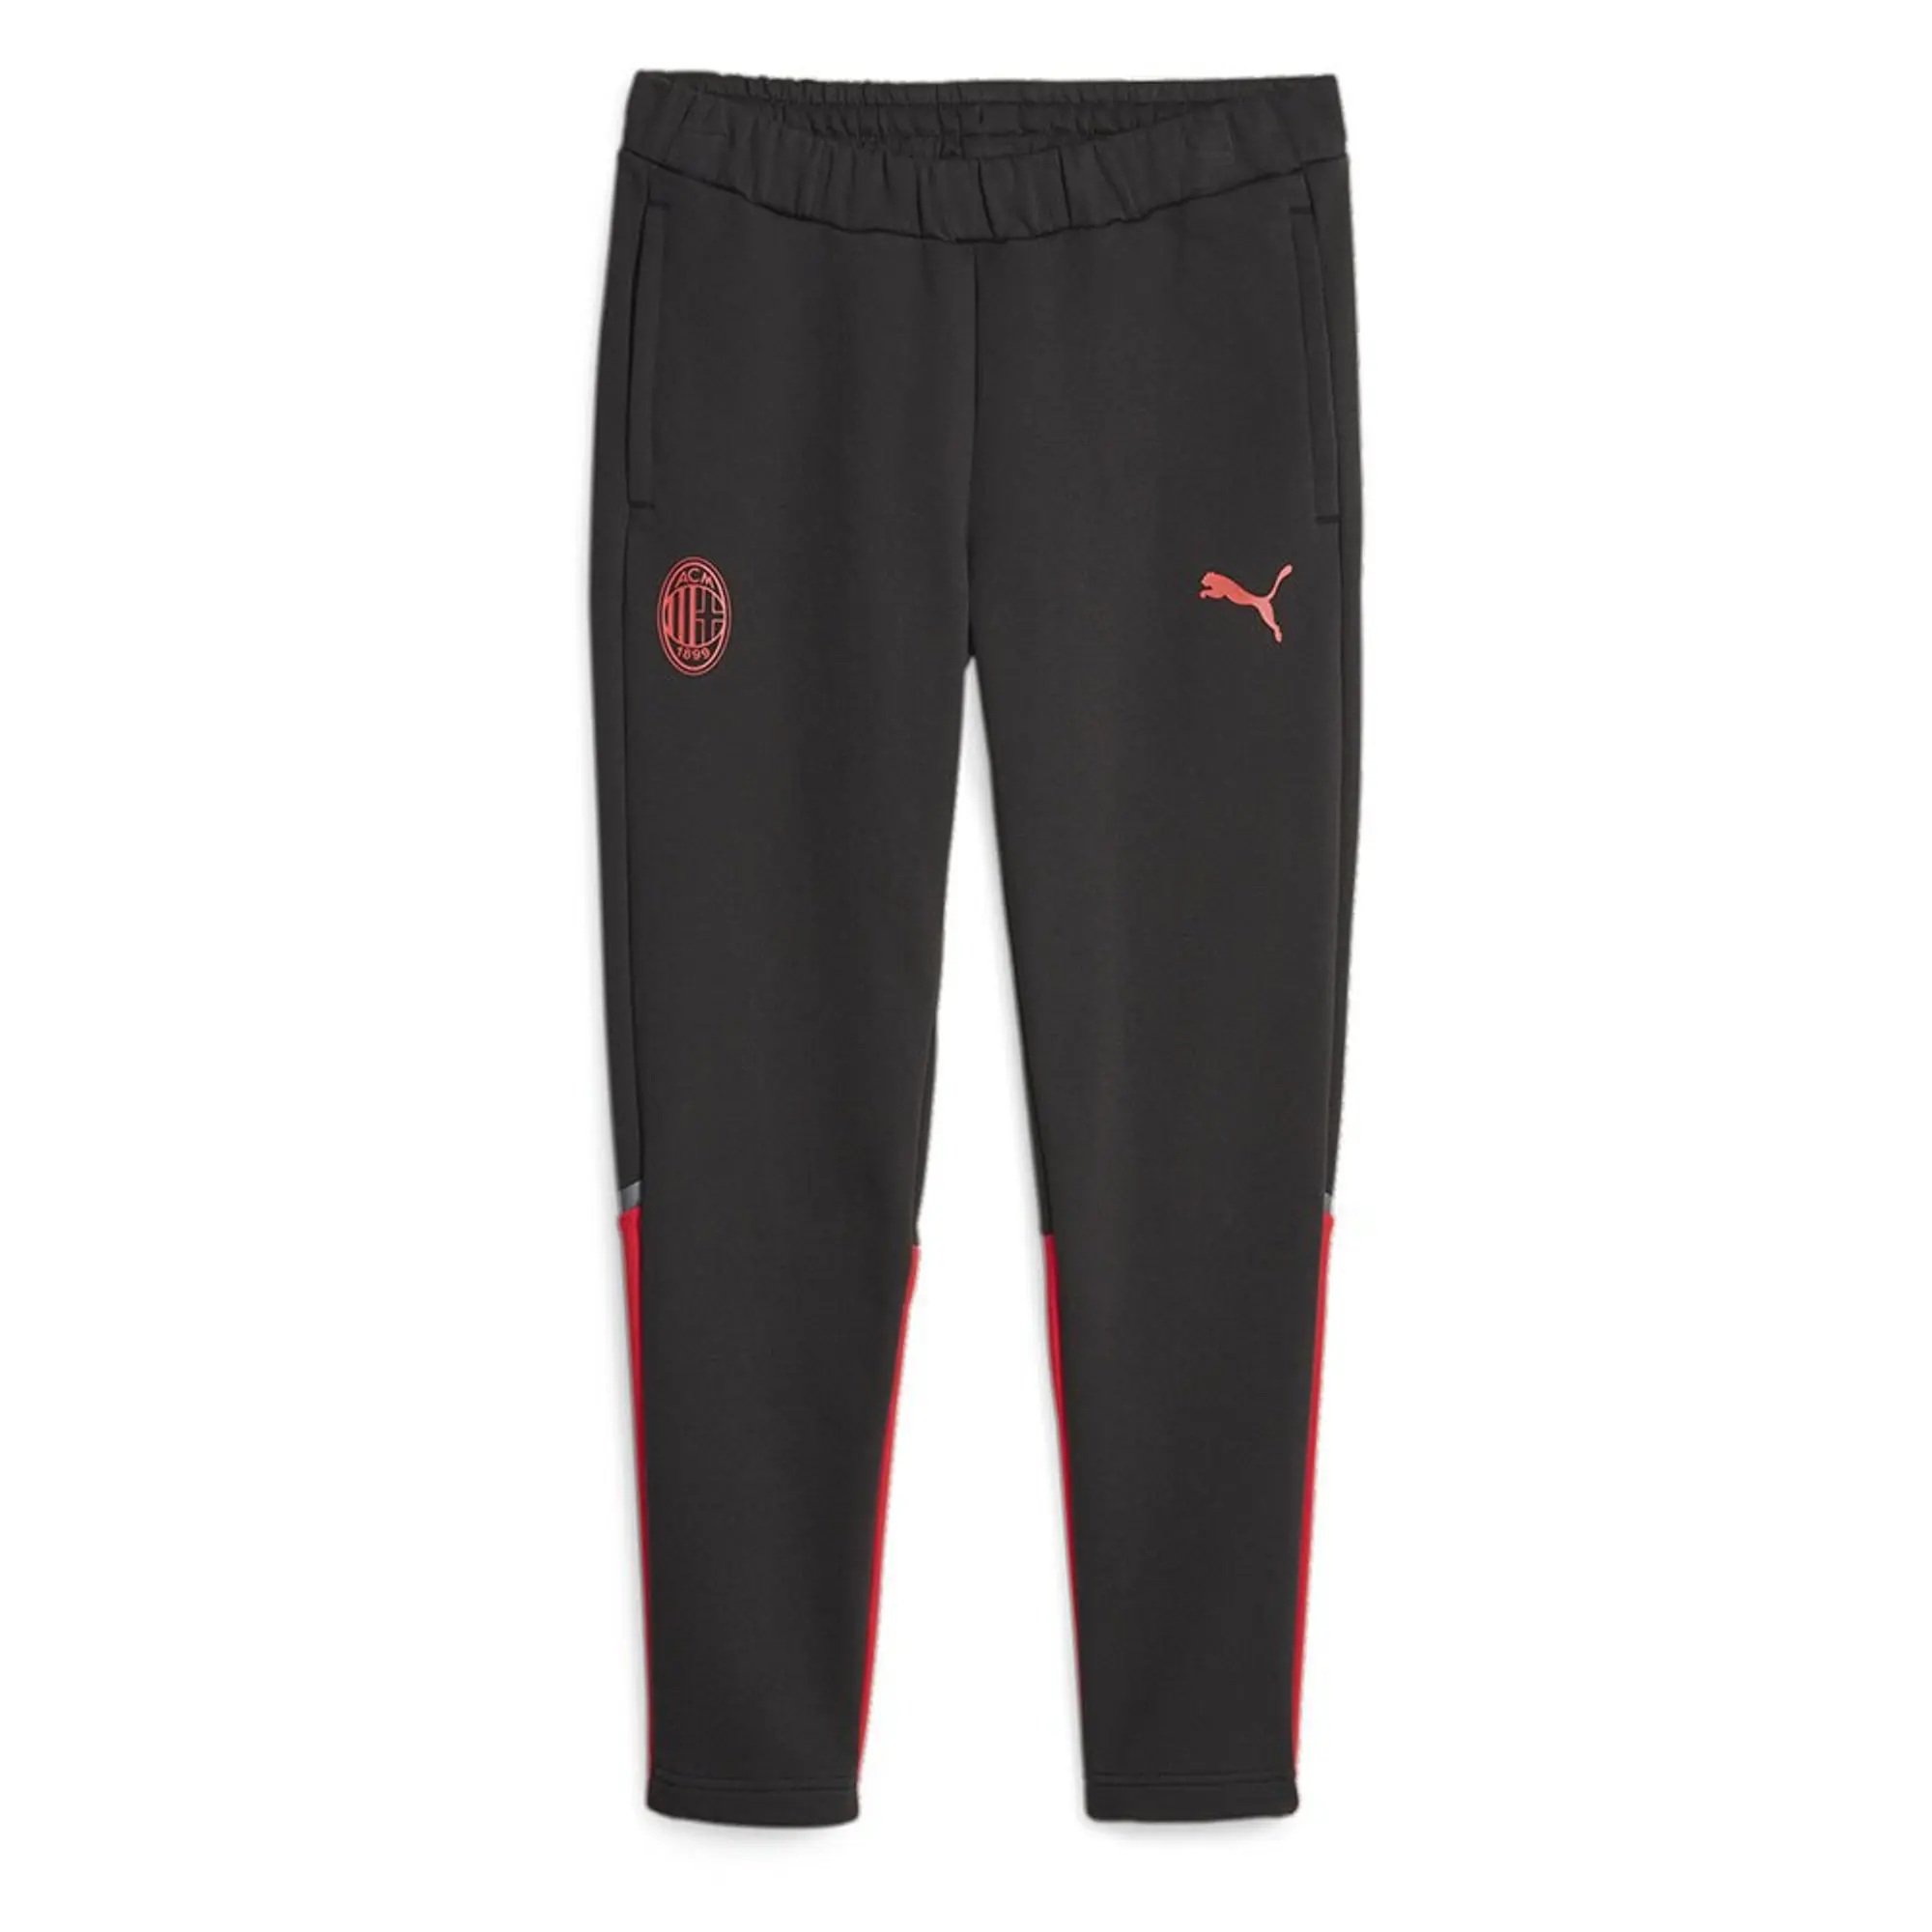 Puma Milan Sweatpants Casuals - Black/Red - Black